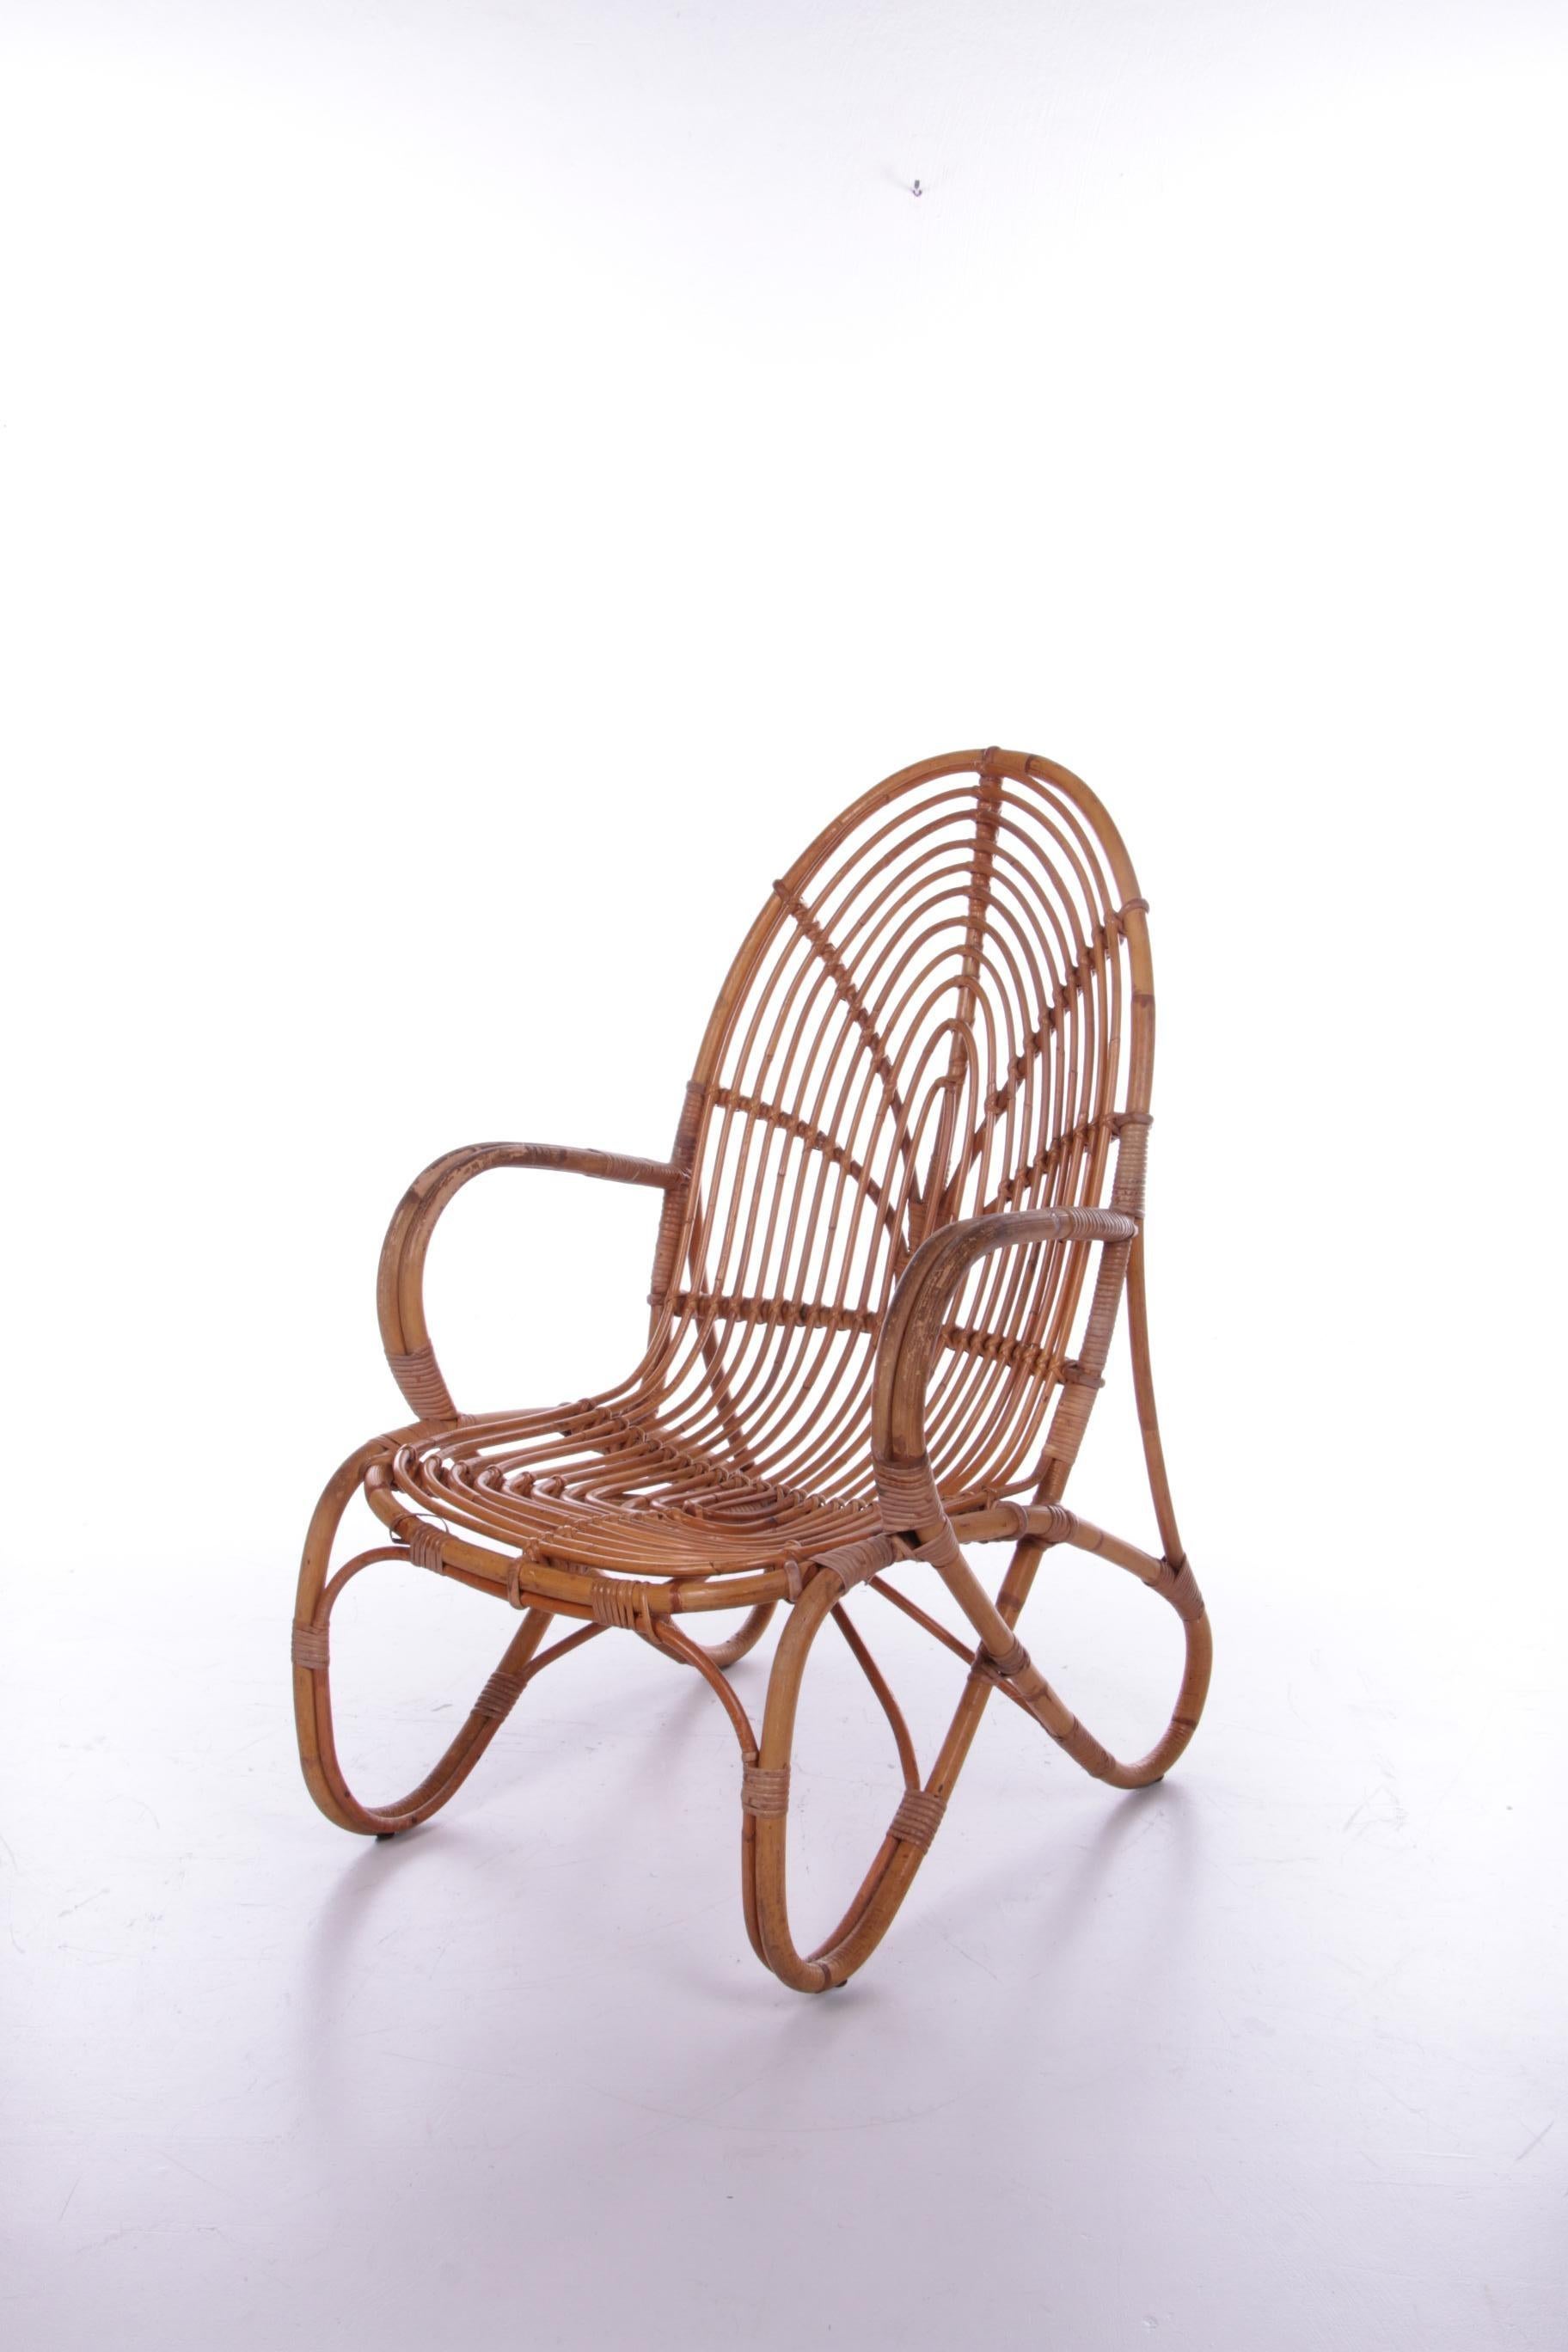 Mid-20th Century Vintage Dutch Design Rattan Lounge Chair Rohe Noordwolde